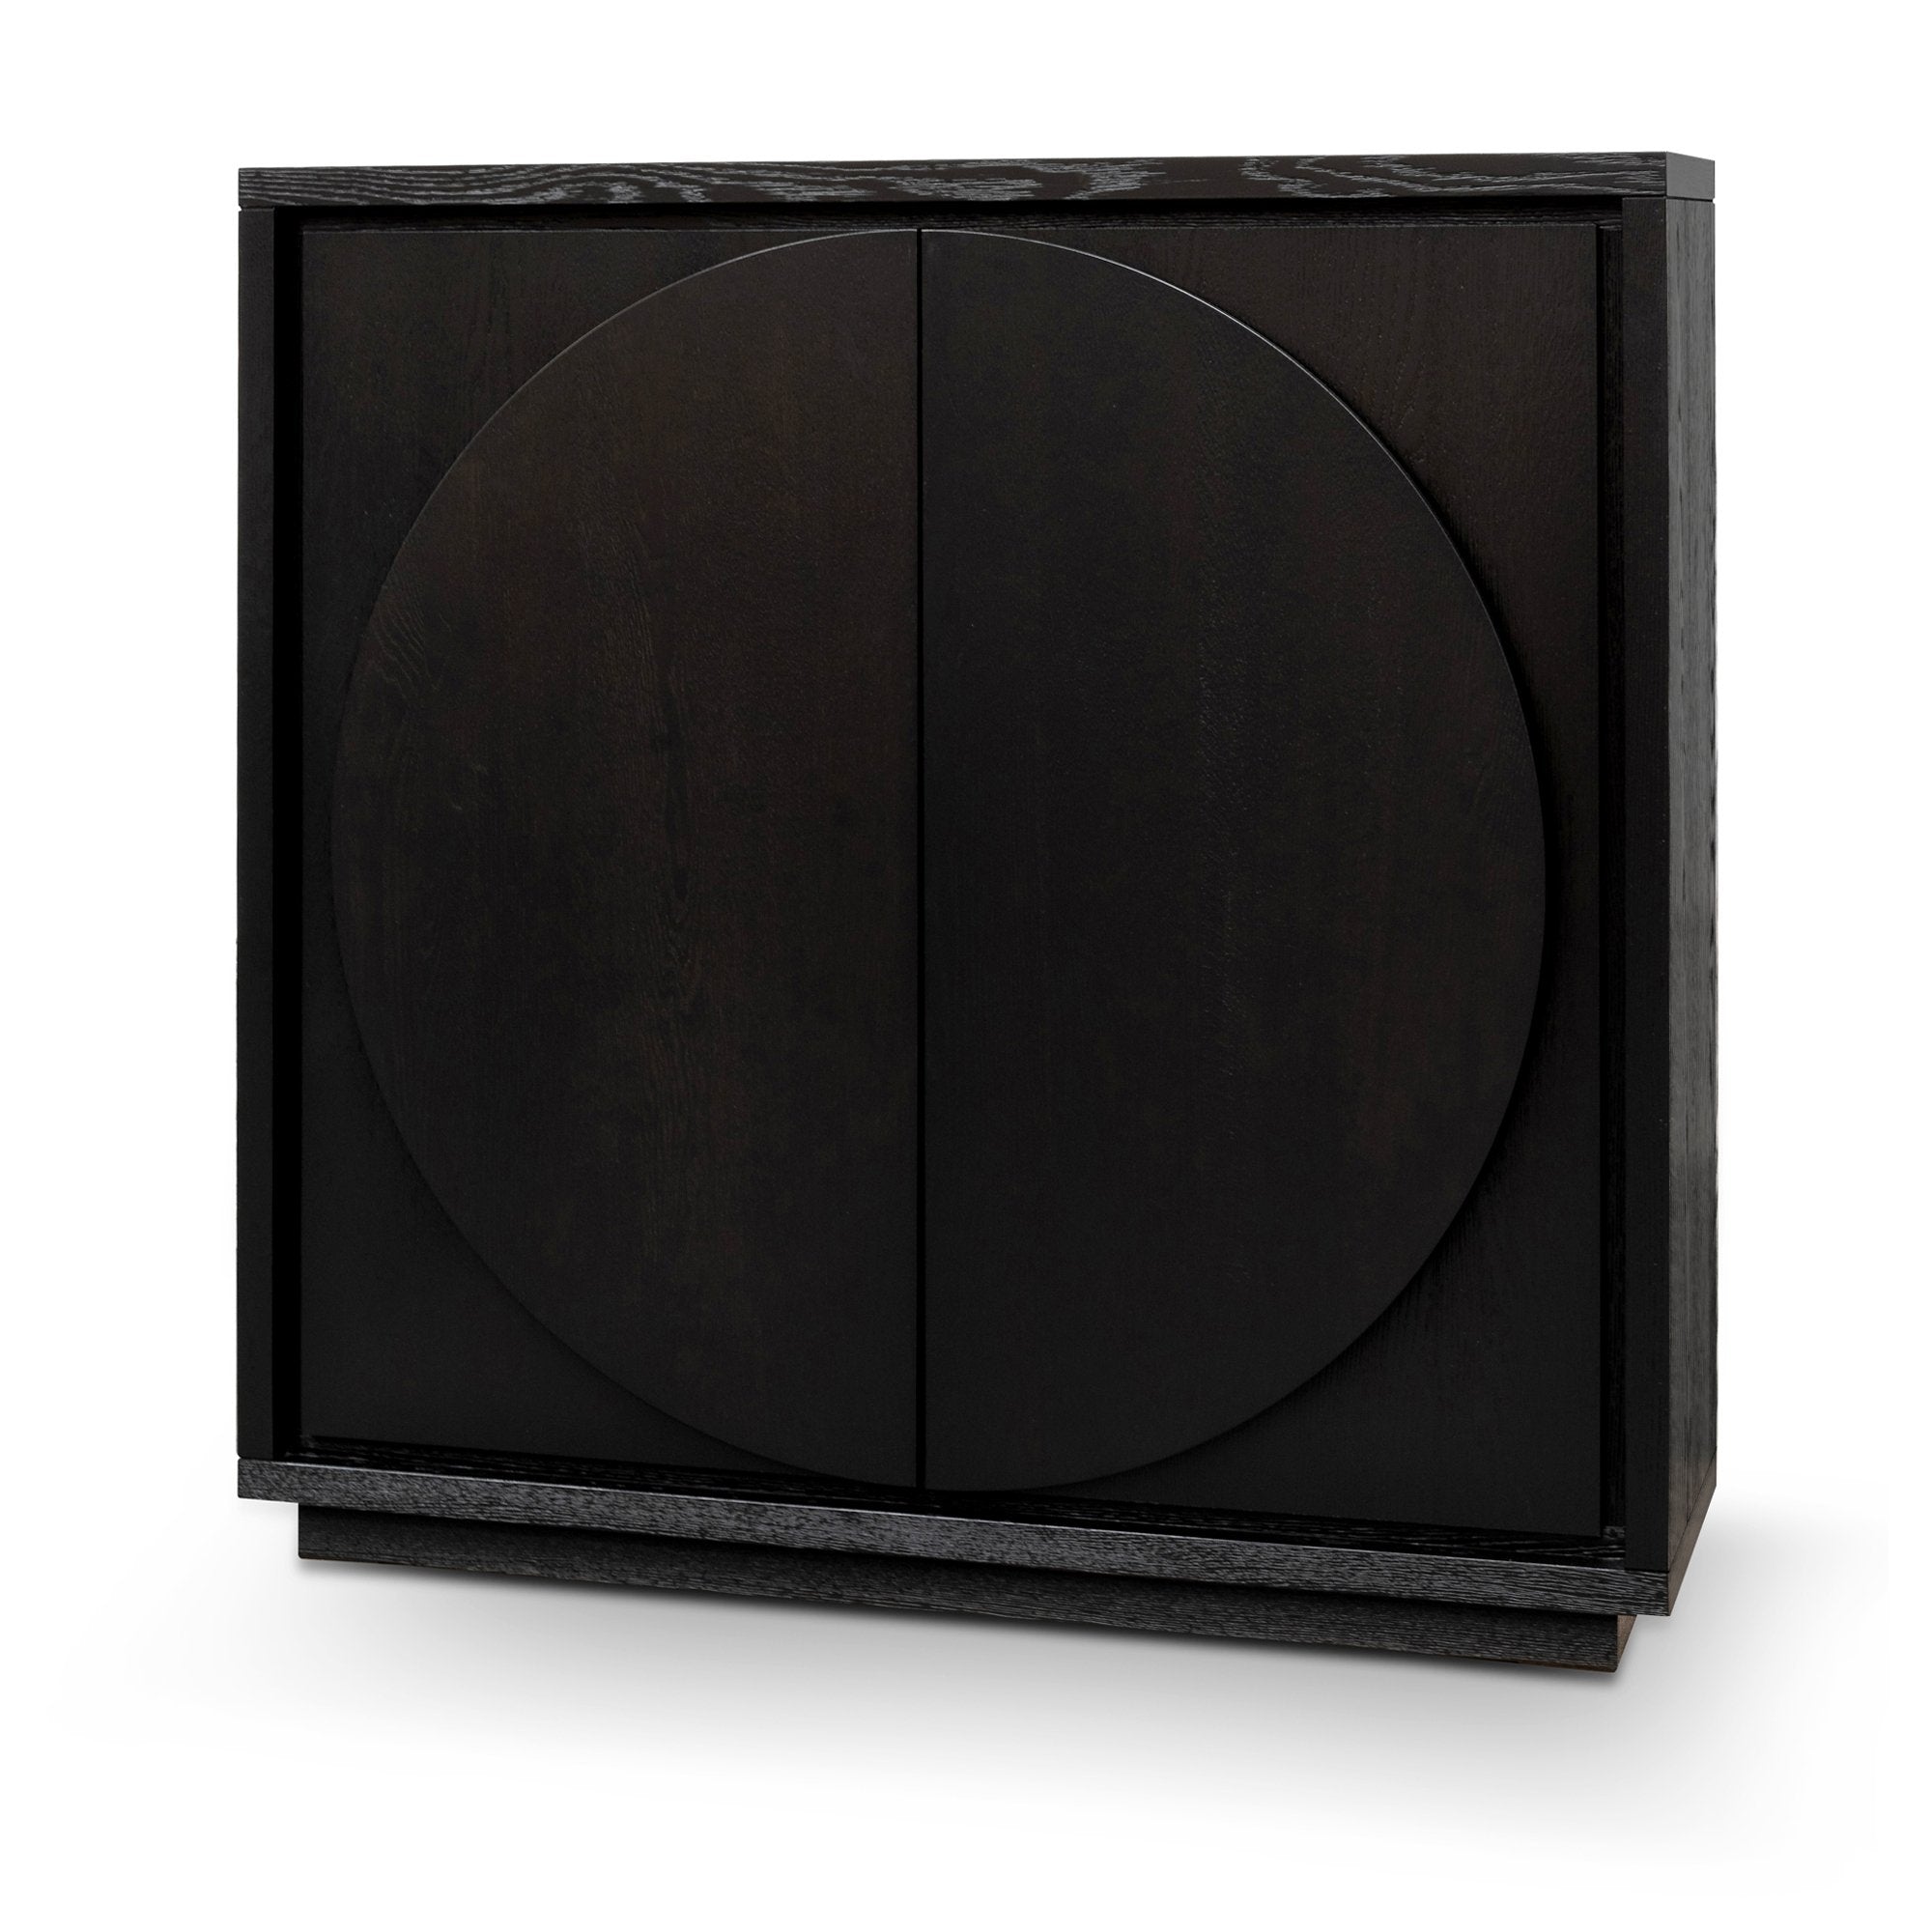 2 Doors Wooden Storage Cabinet - Textured Espresso Black